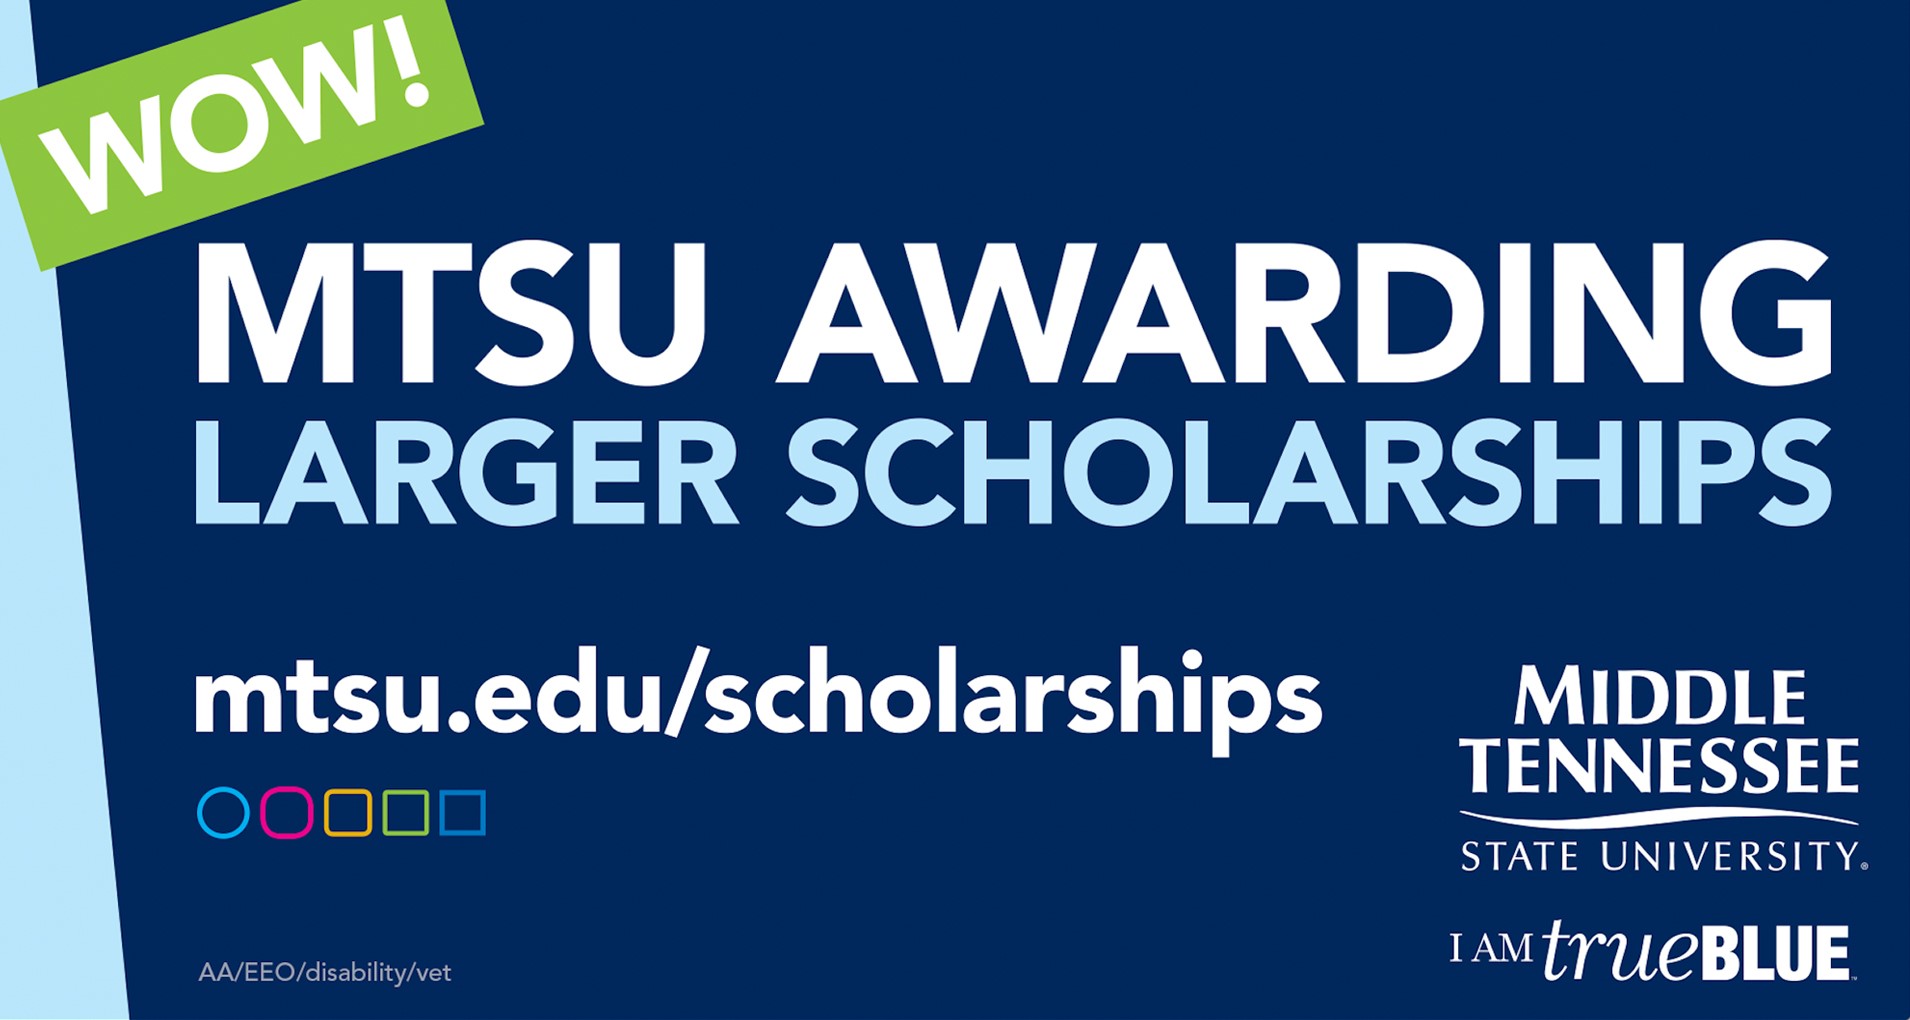 MTSU is awarding the largest Scholarships